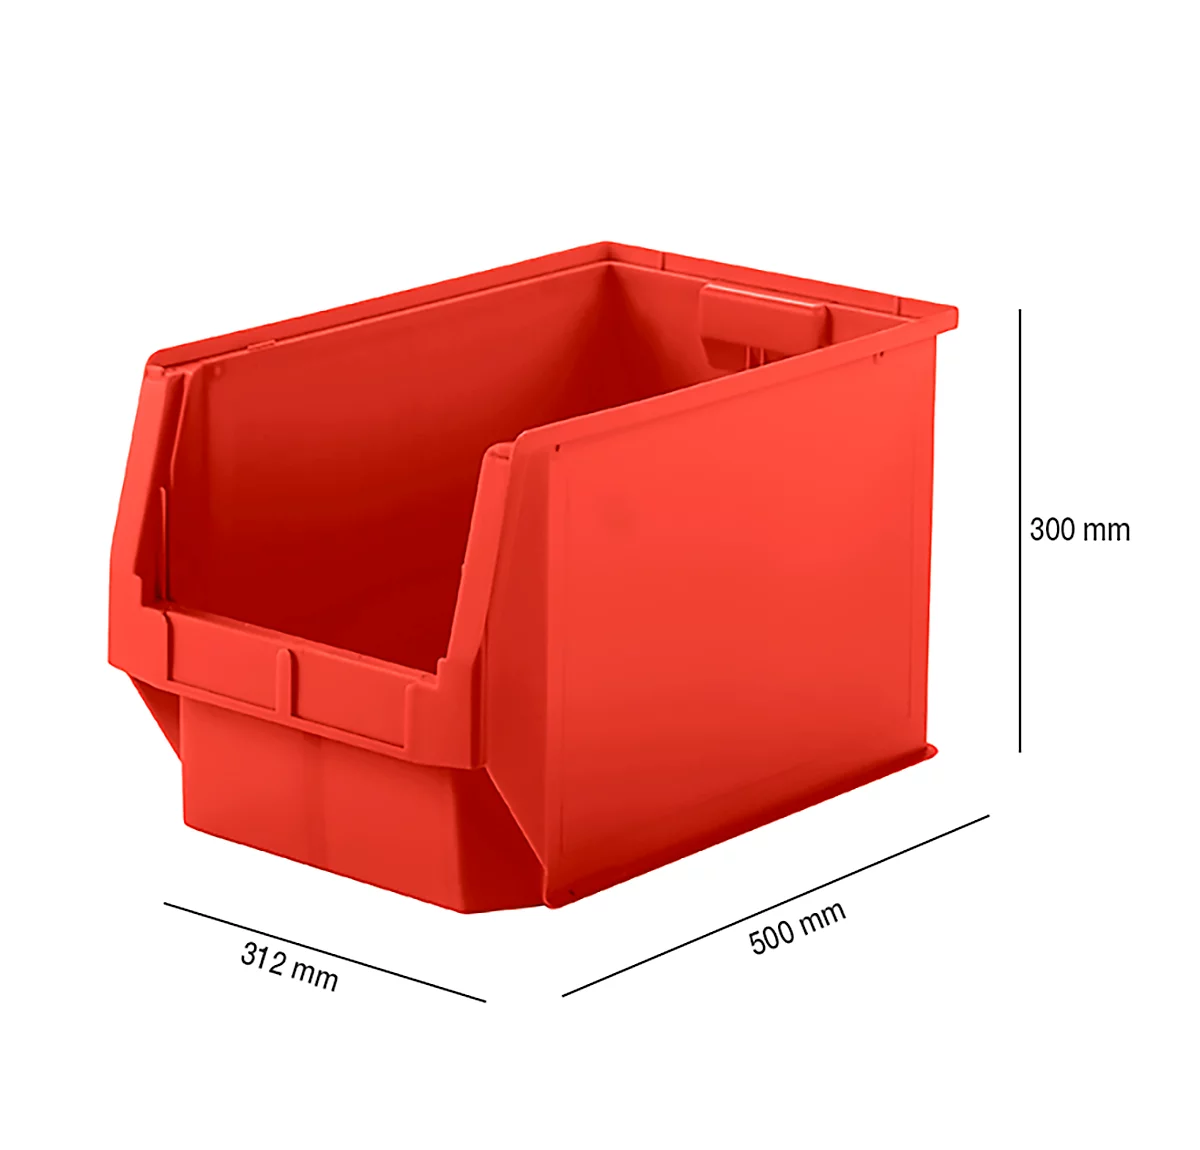 SSI Schäfer LF 533 caja de almacenaje abierta, polipropileno, L 500 x An 312 x Al 300 mm, 38 l, rojo